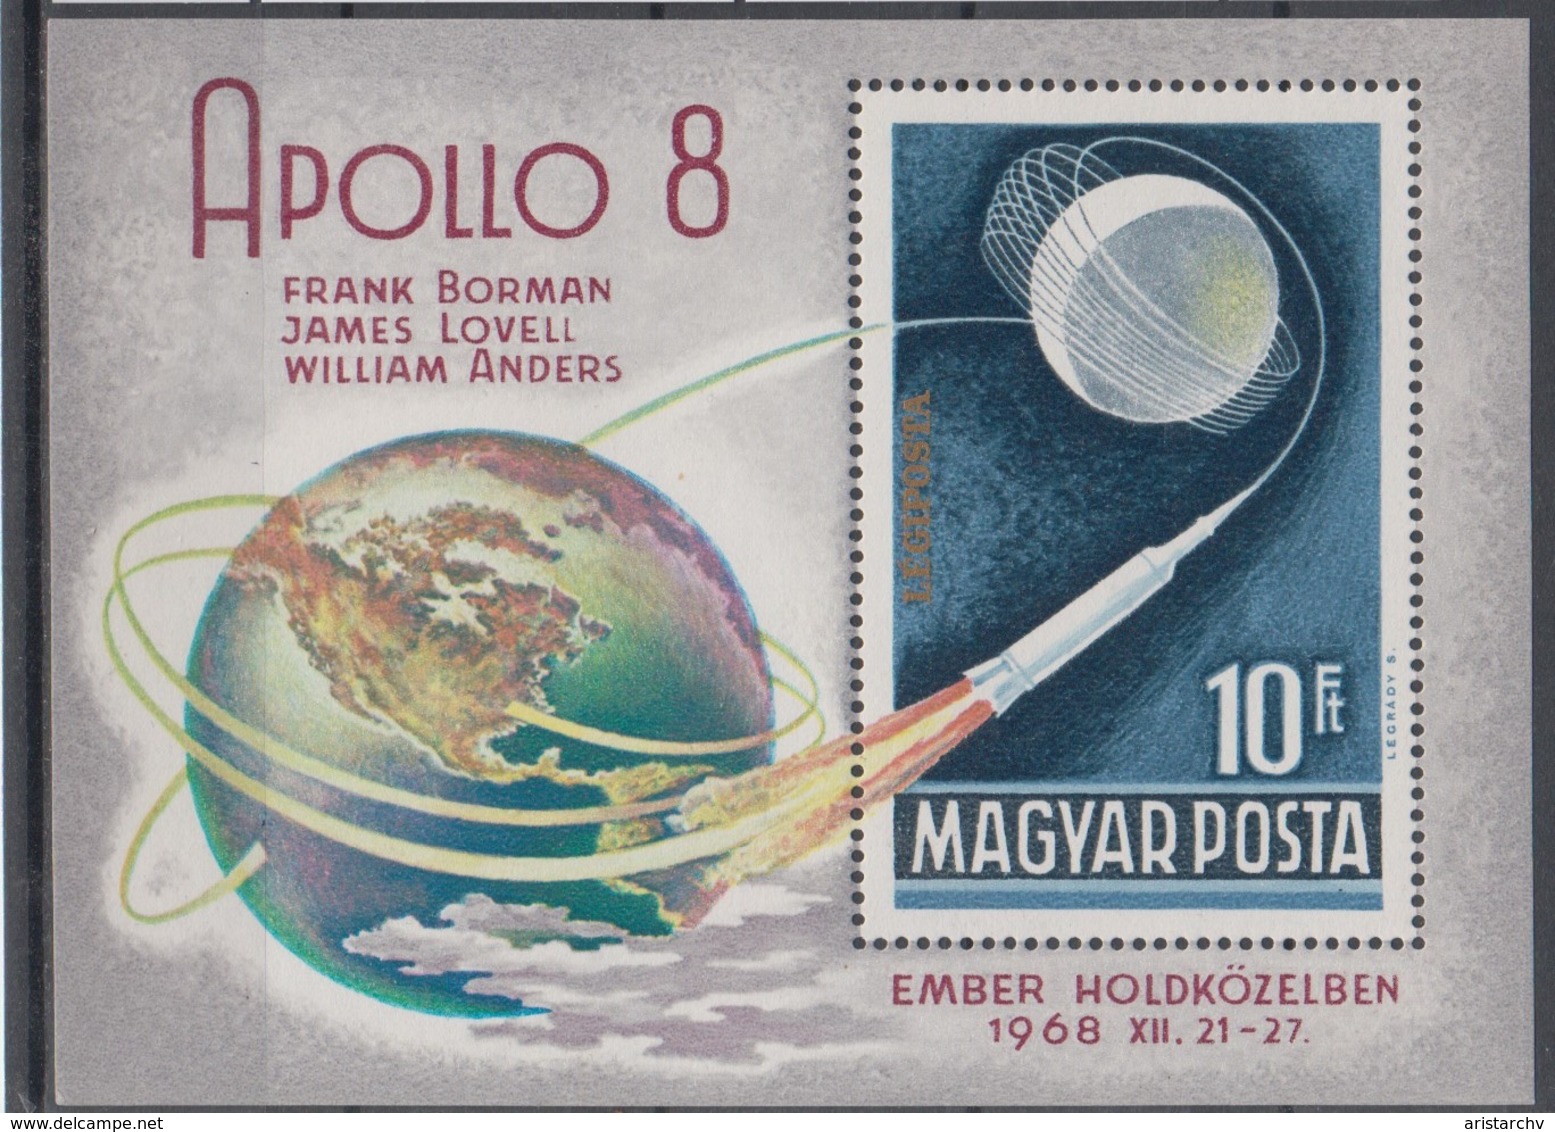 HUNGARY 1968 SPACE APOLLO 8 FRANK BORMAN JAMES LOVELL WILLIAM ANDERS S/SHEET - Europa